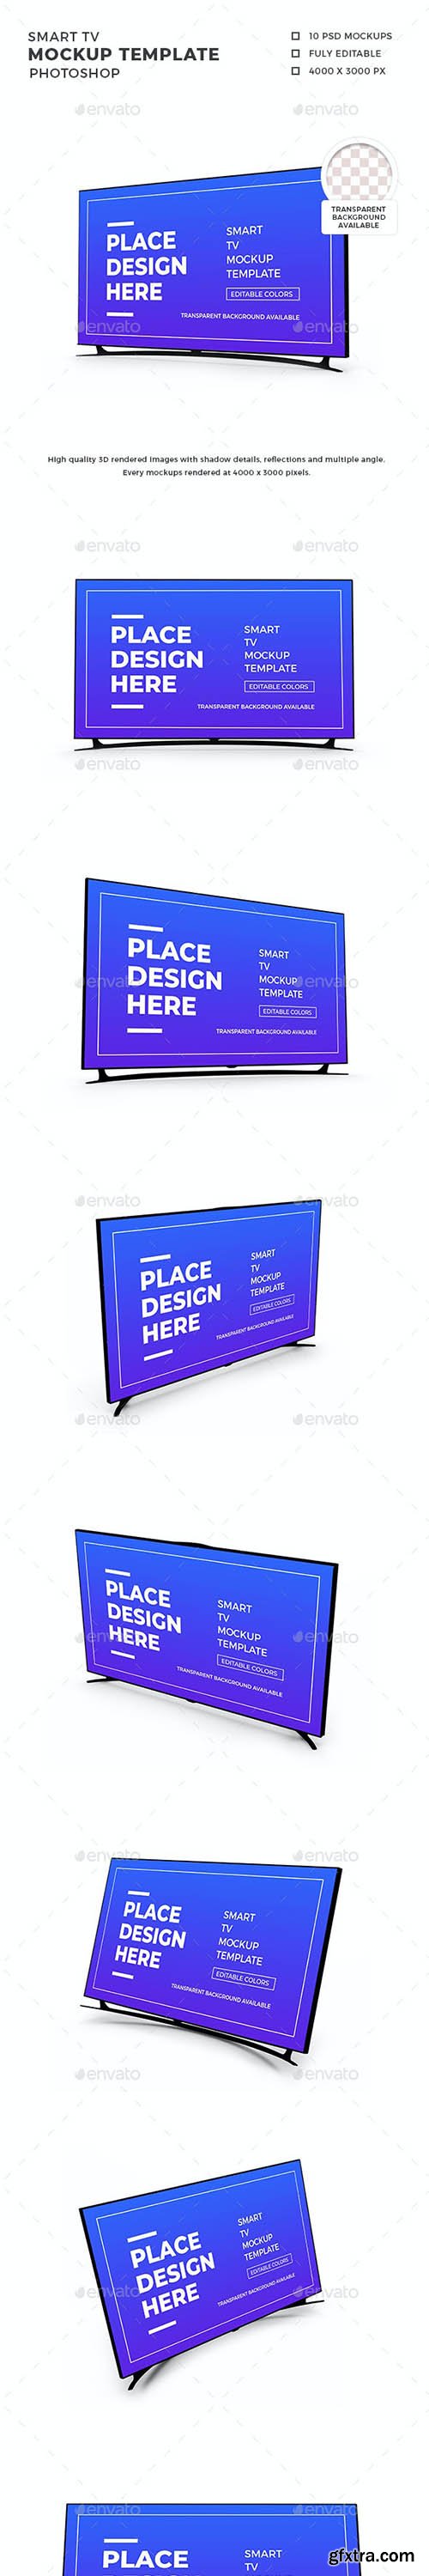 GraphicRiver - Smart TV 3D Mockup Template 30873725